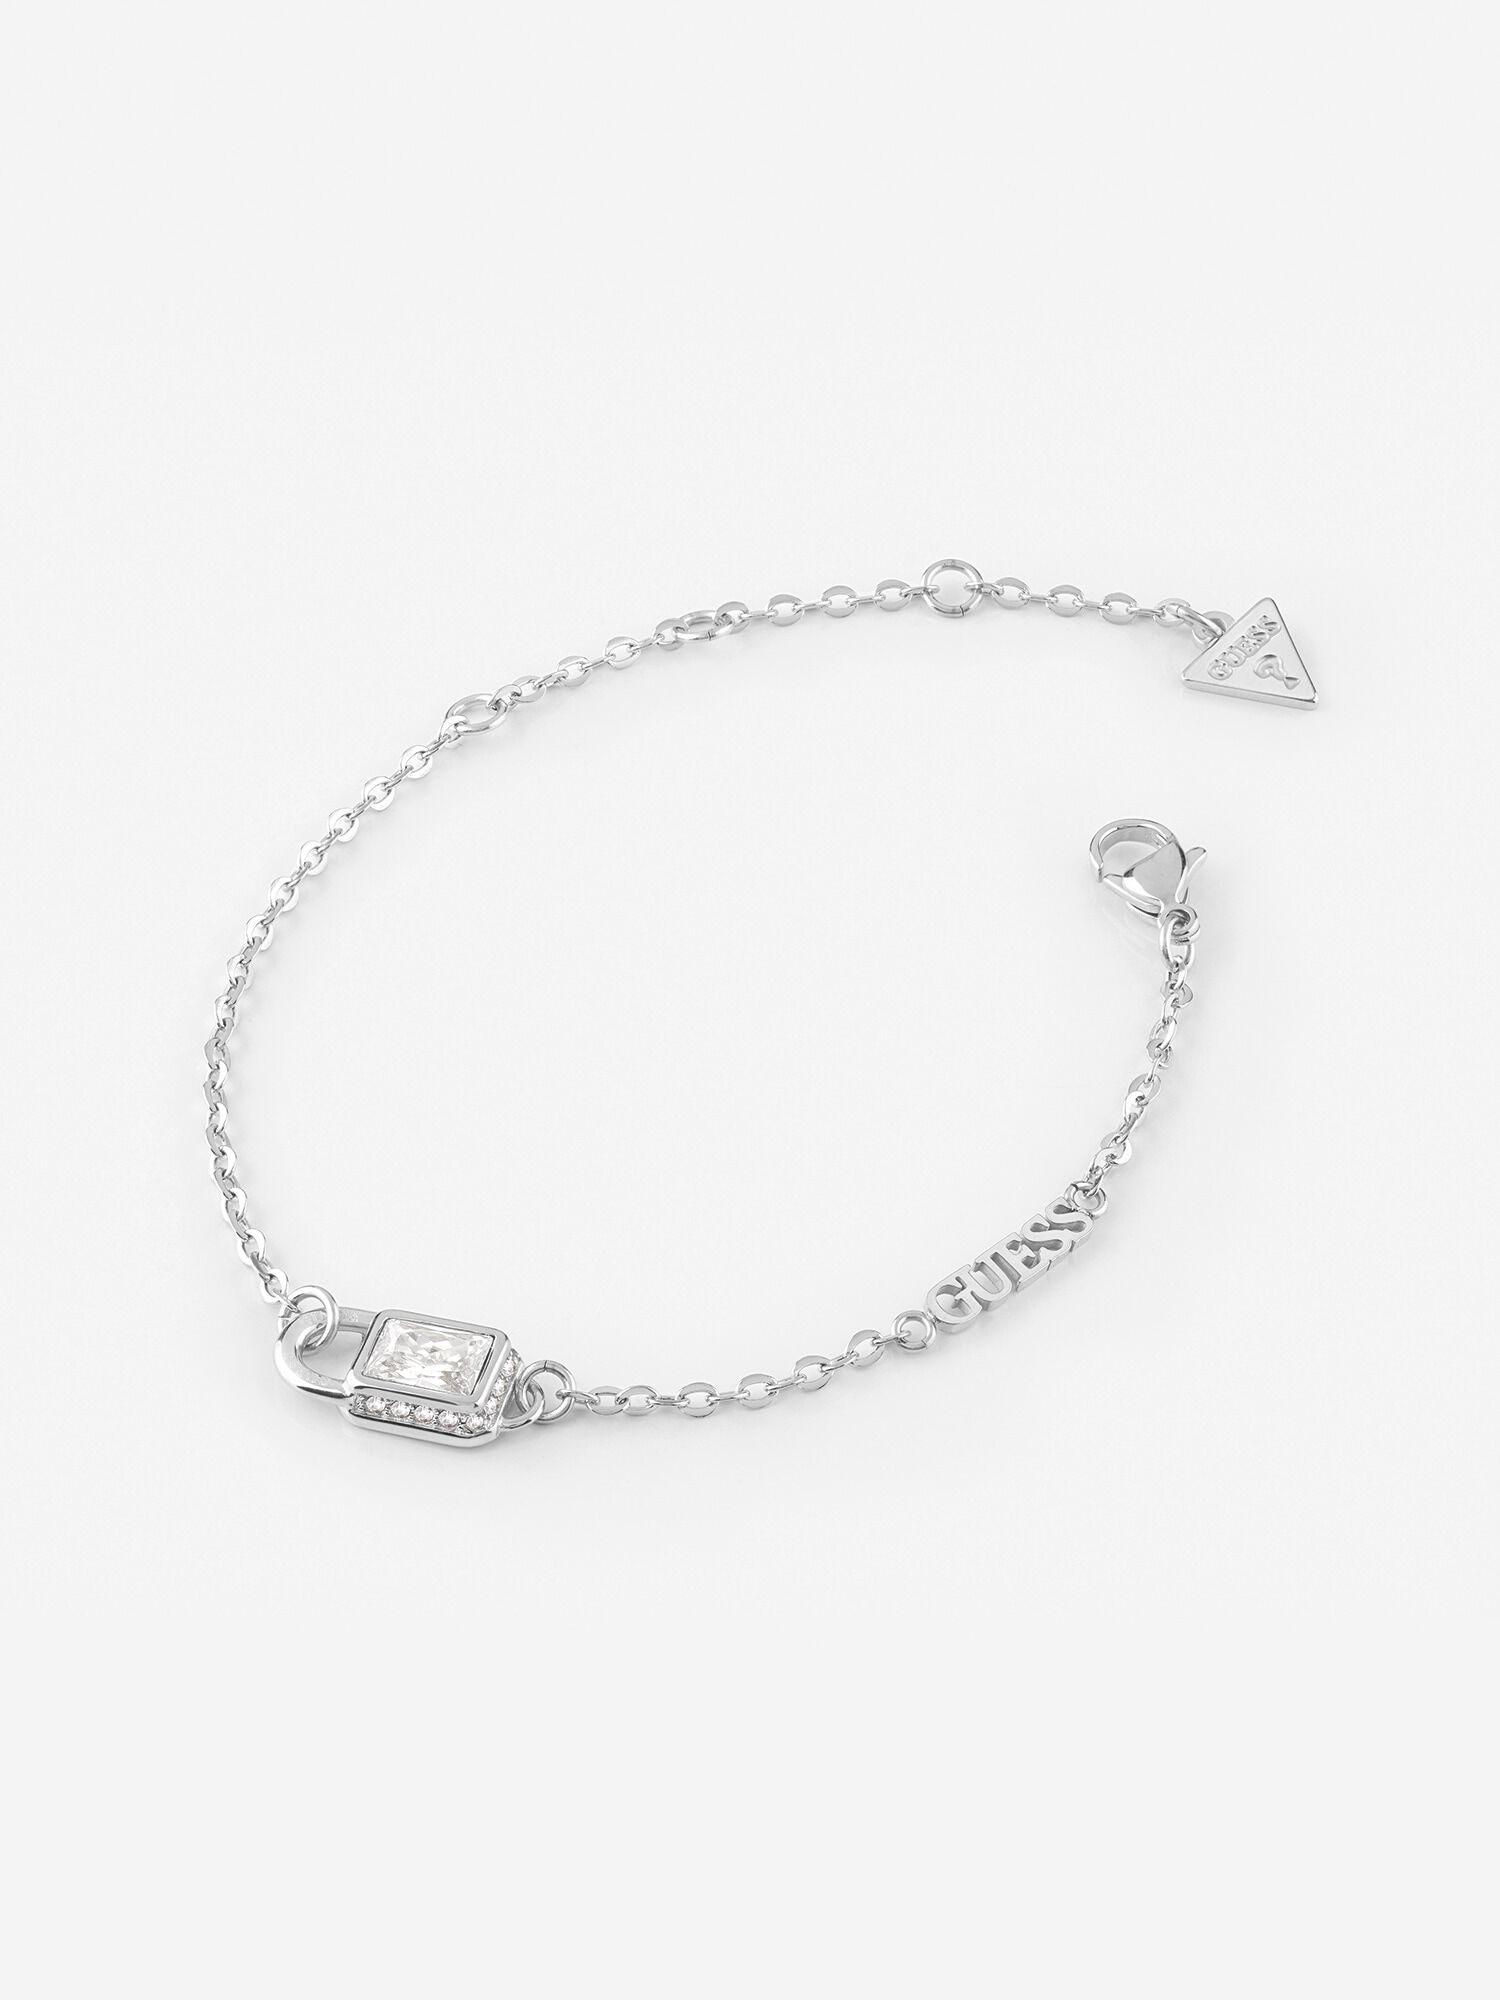 Guess silver tone bracelet heart, kiss love diamond ring charm bracelet  link | eBay